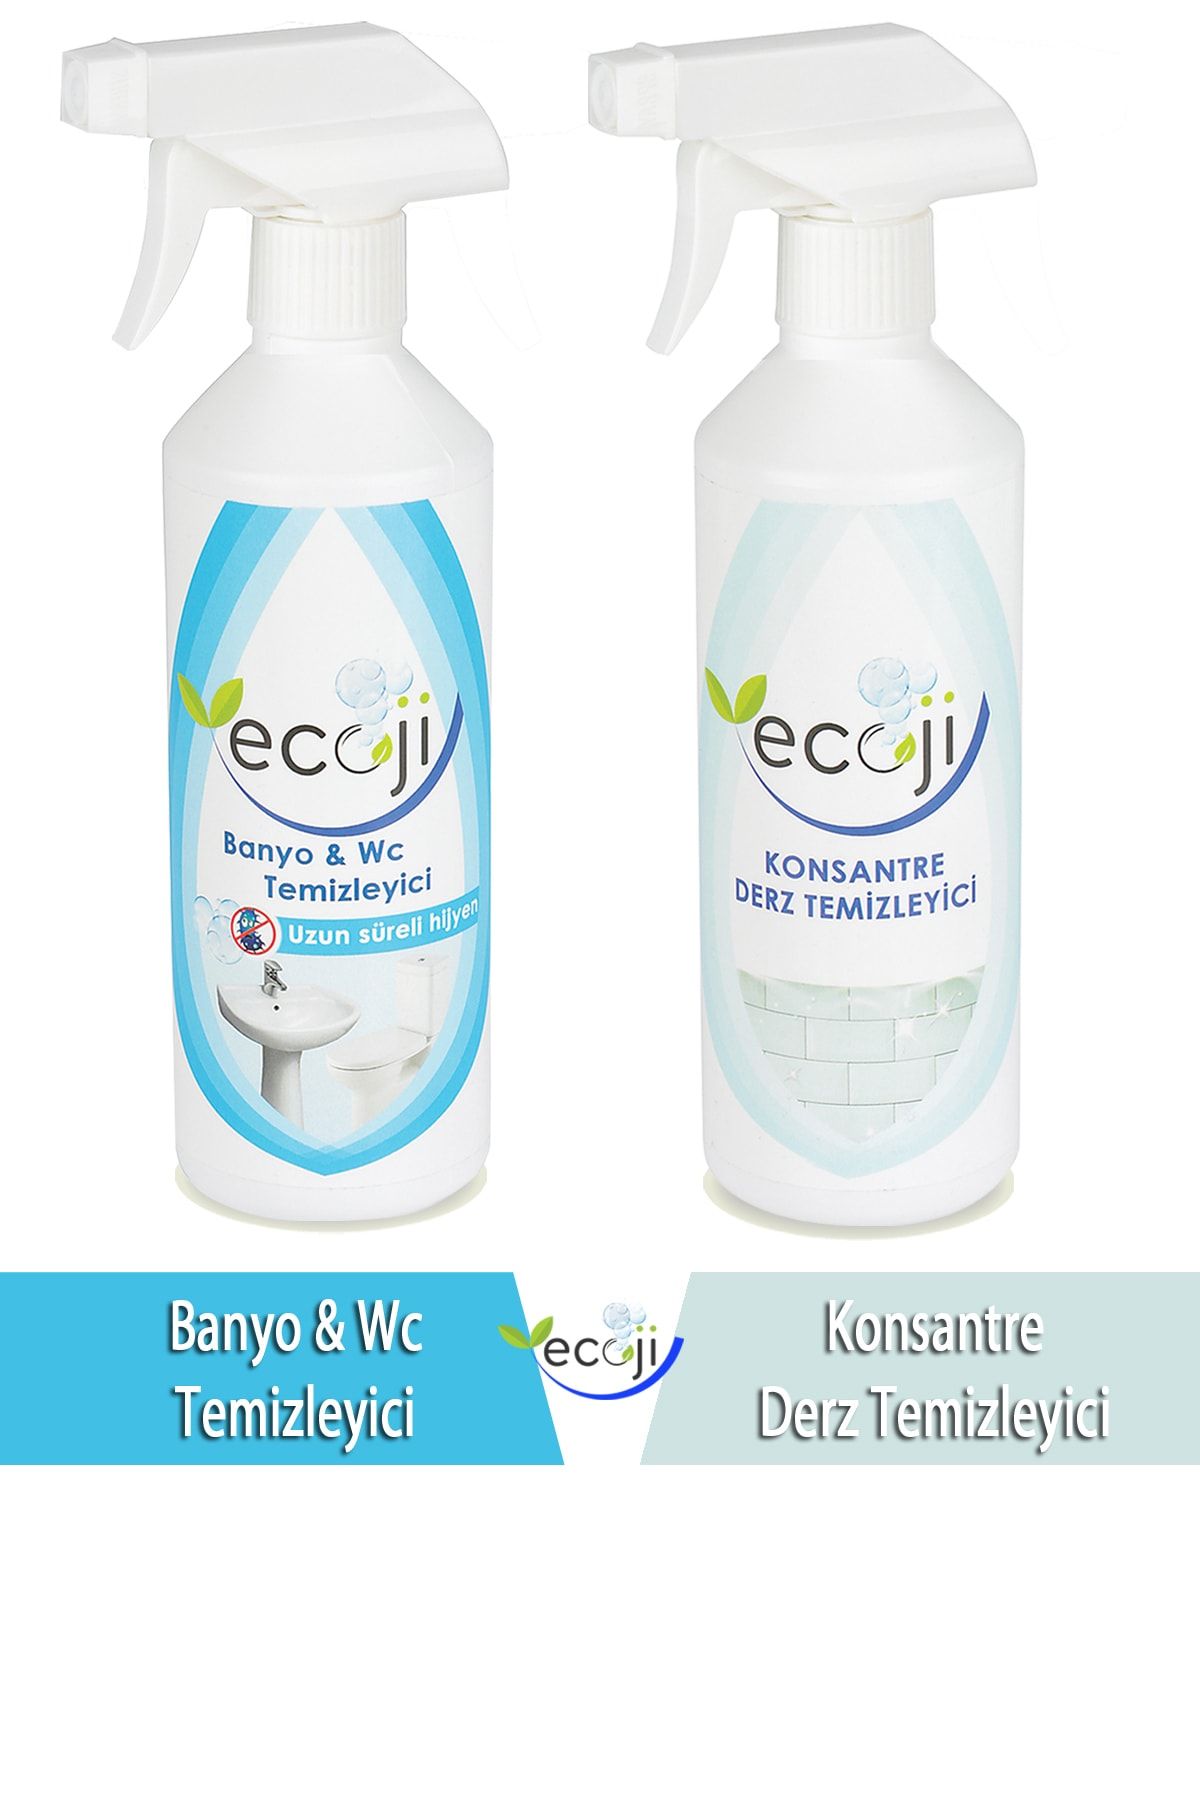 ECOJİ Banyo & Wc Temizleyici // Konsantre Derz Temizleyici – 500 ml * 2